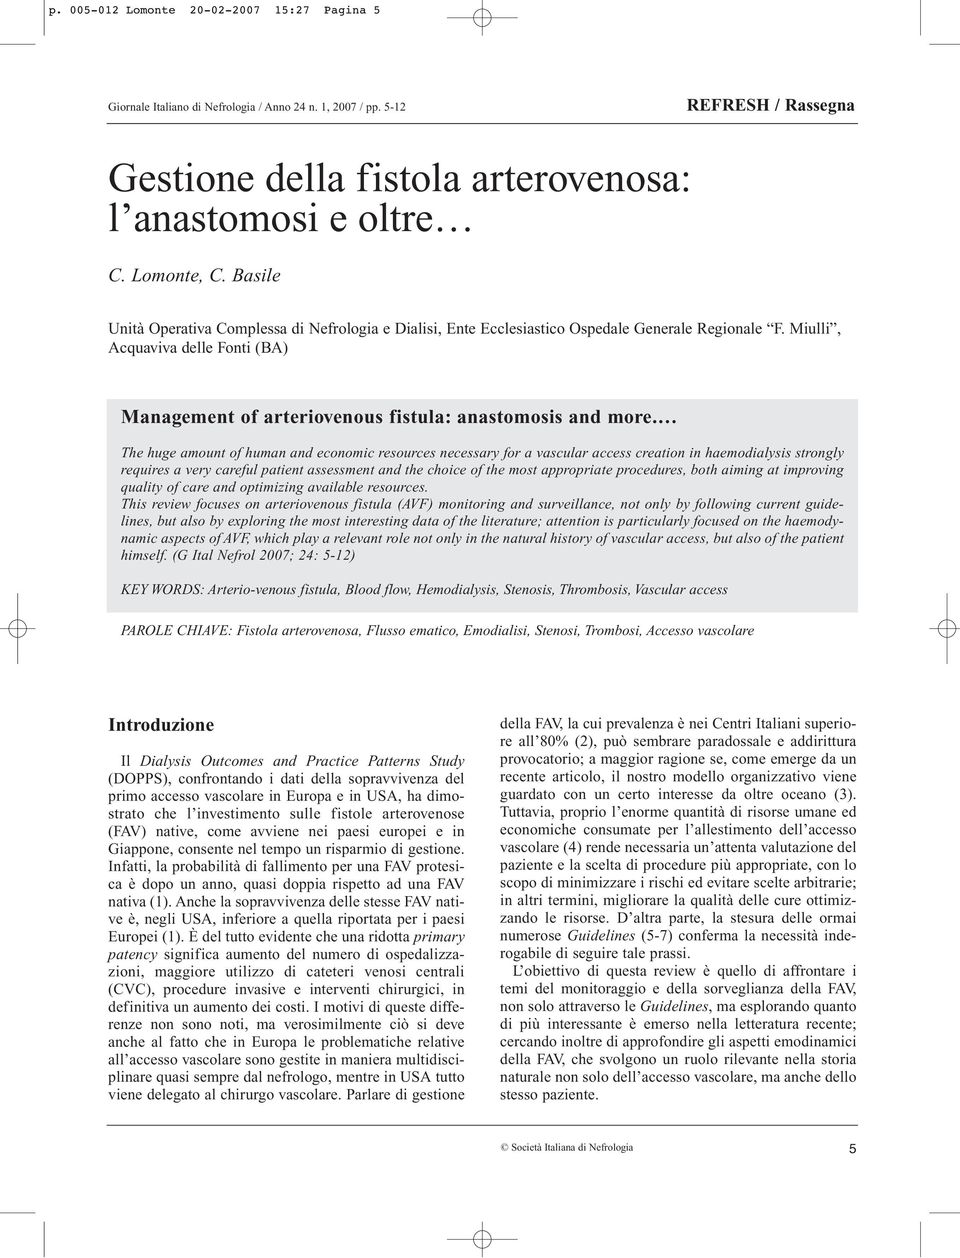 Miulli, Acquaviva delle Fonti (BA) Management of arteriovenous fistula: anastomosis and more.